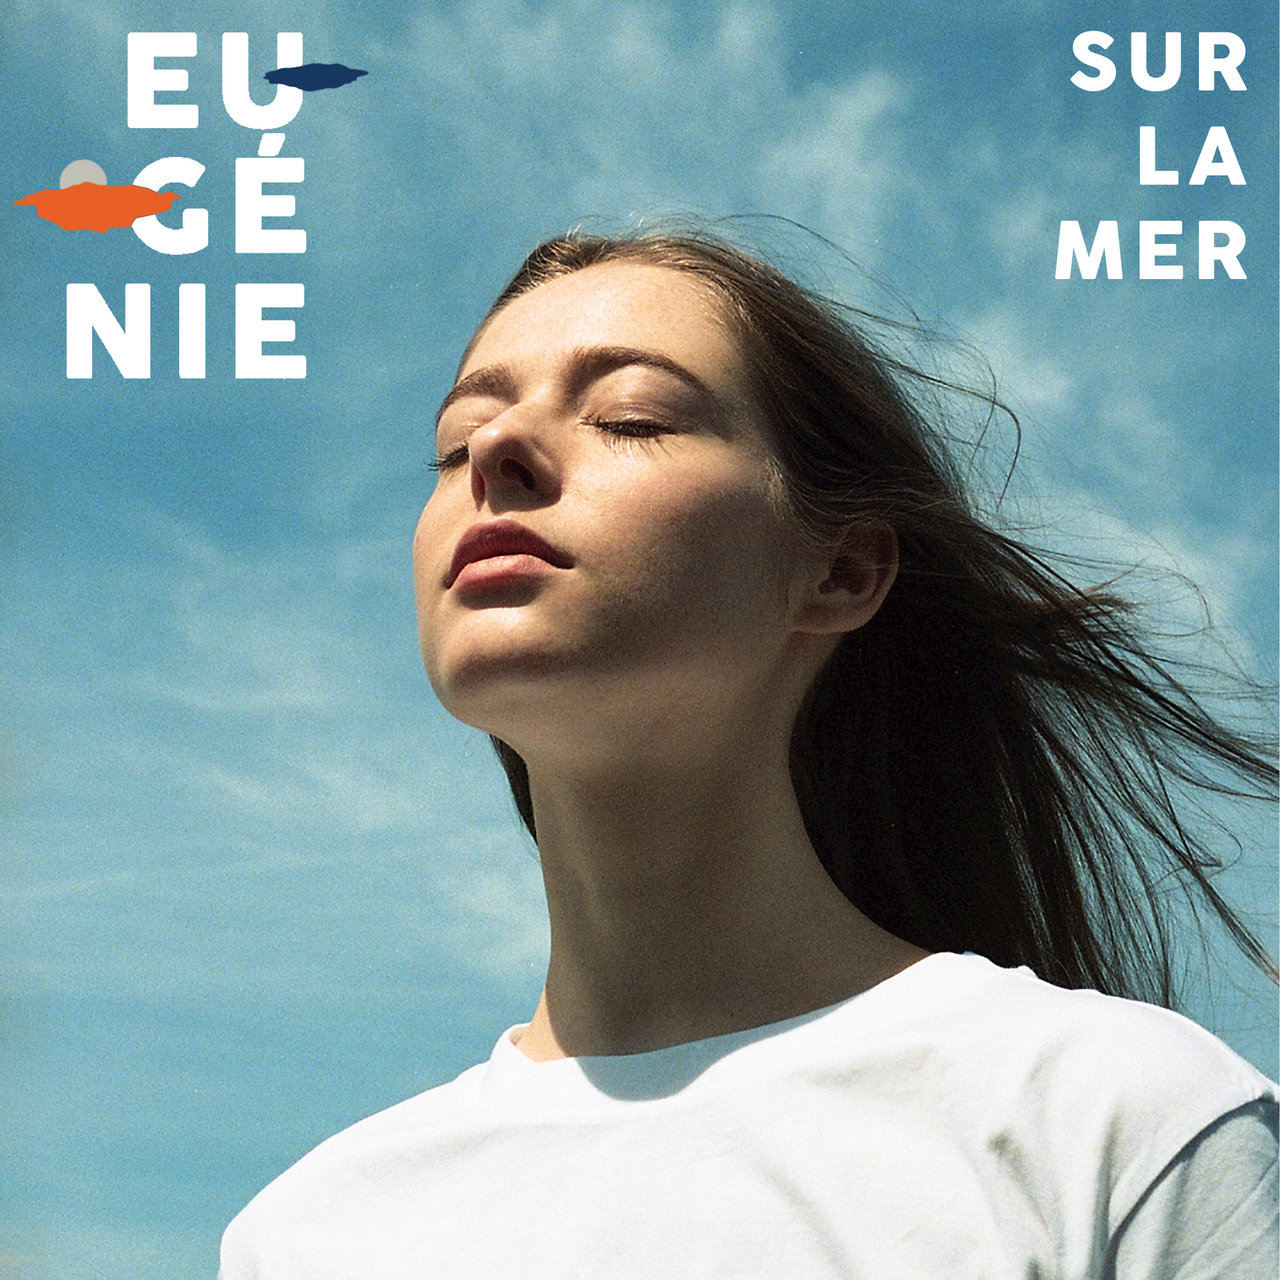 Eugénie Sur la mer cover artwork